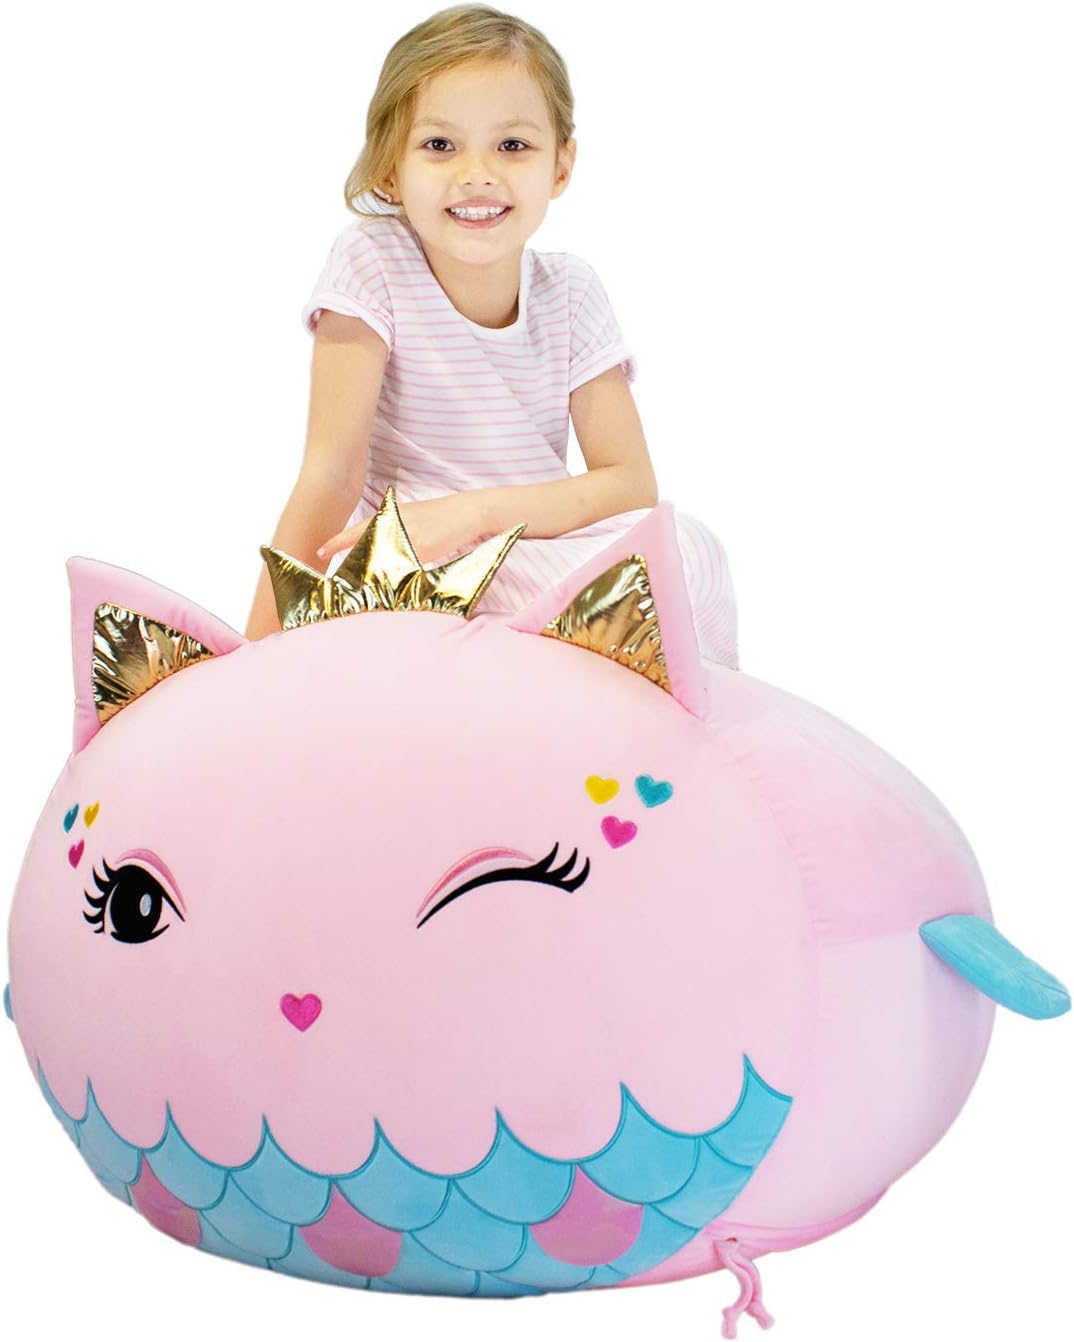 Yoweenton Mermaid Stuffed Animal Toy Storage | Kids Bean Bag Chair | Large Size 25x23 Inch Velvet Extra Soft | Girls Room Decorations